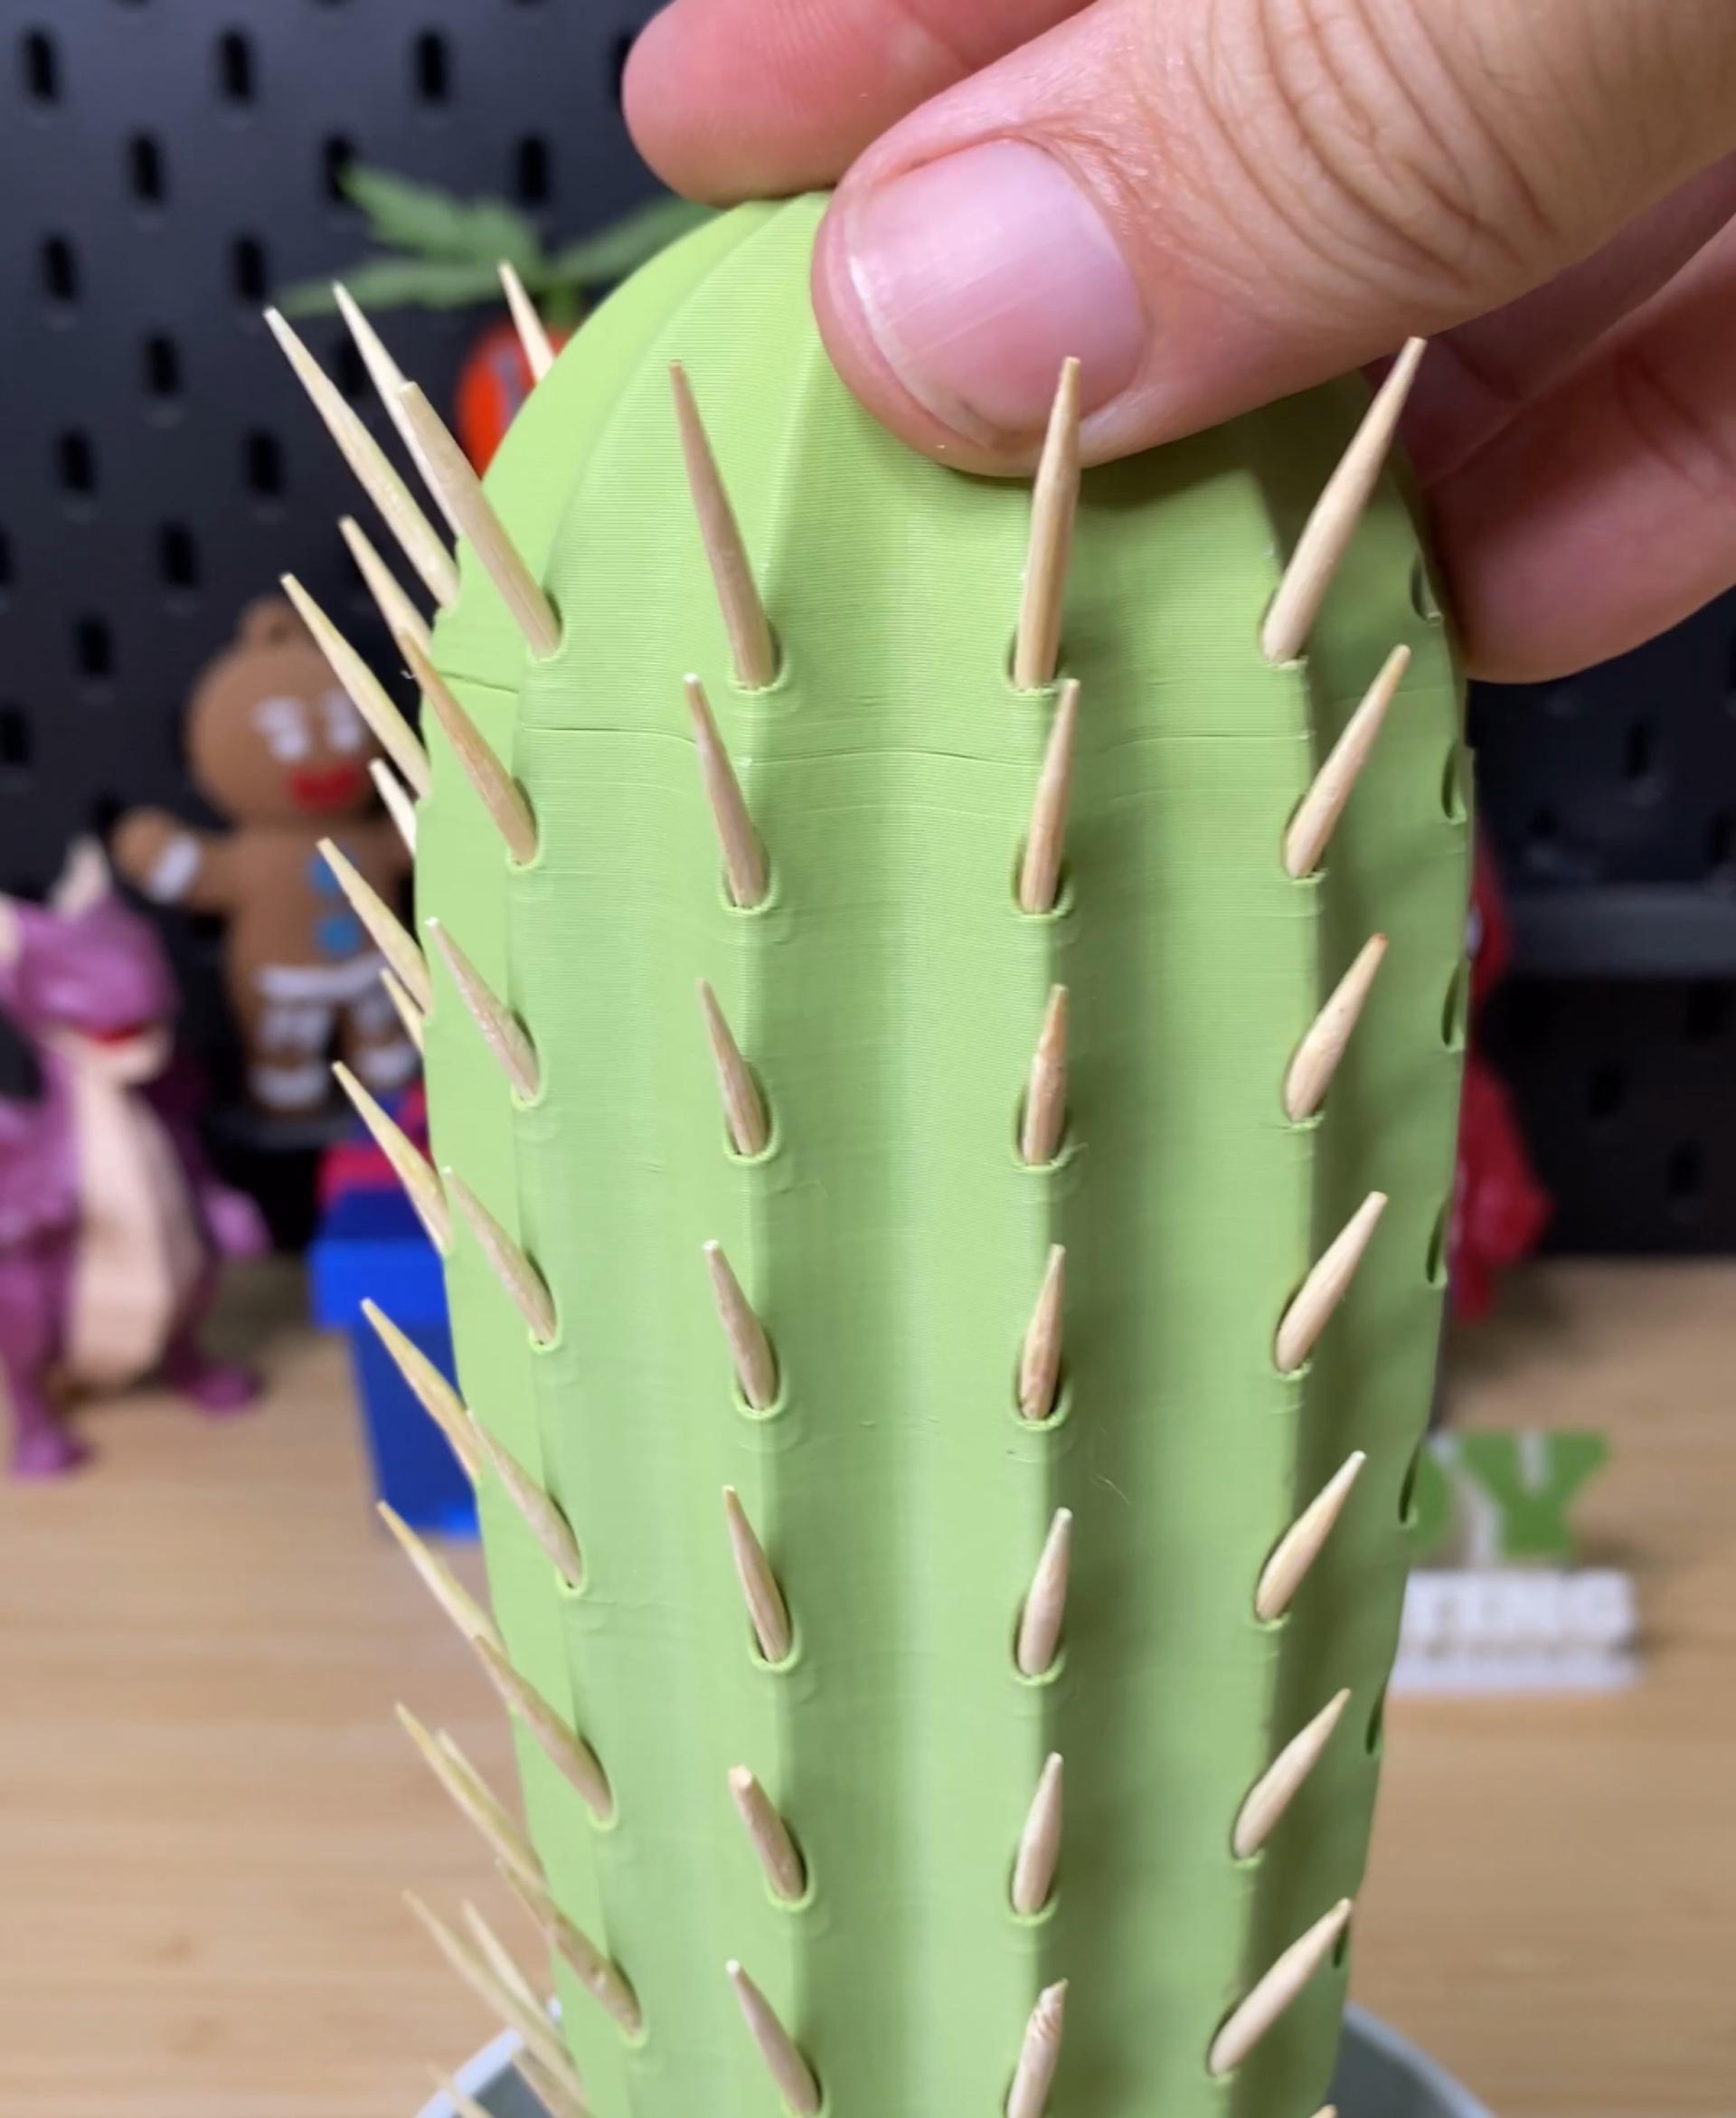 Cactus Toothpick holder - My Make
https://kady3dprinting.com/model/3d-printed-cactus-toothpick-holder - 3d model